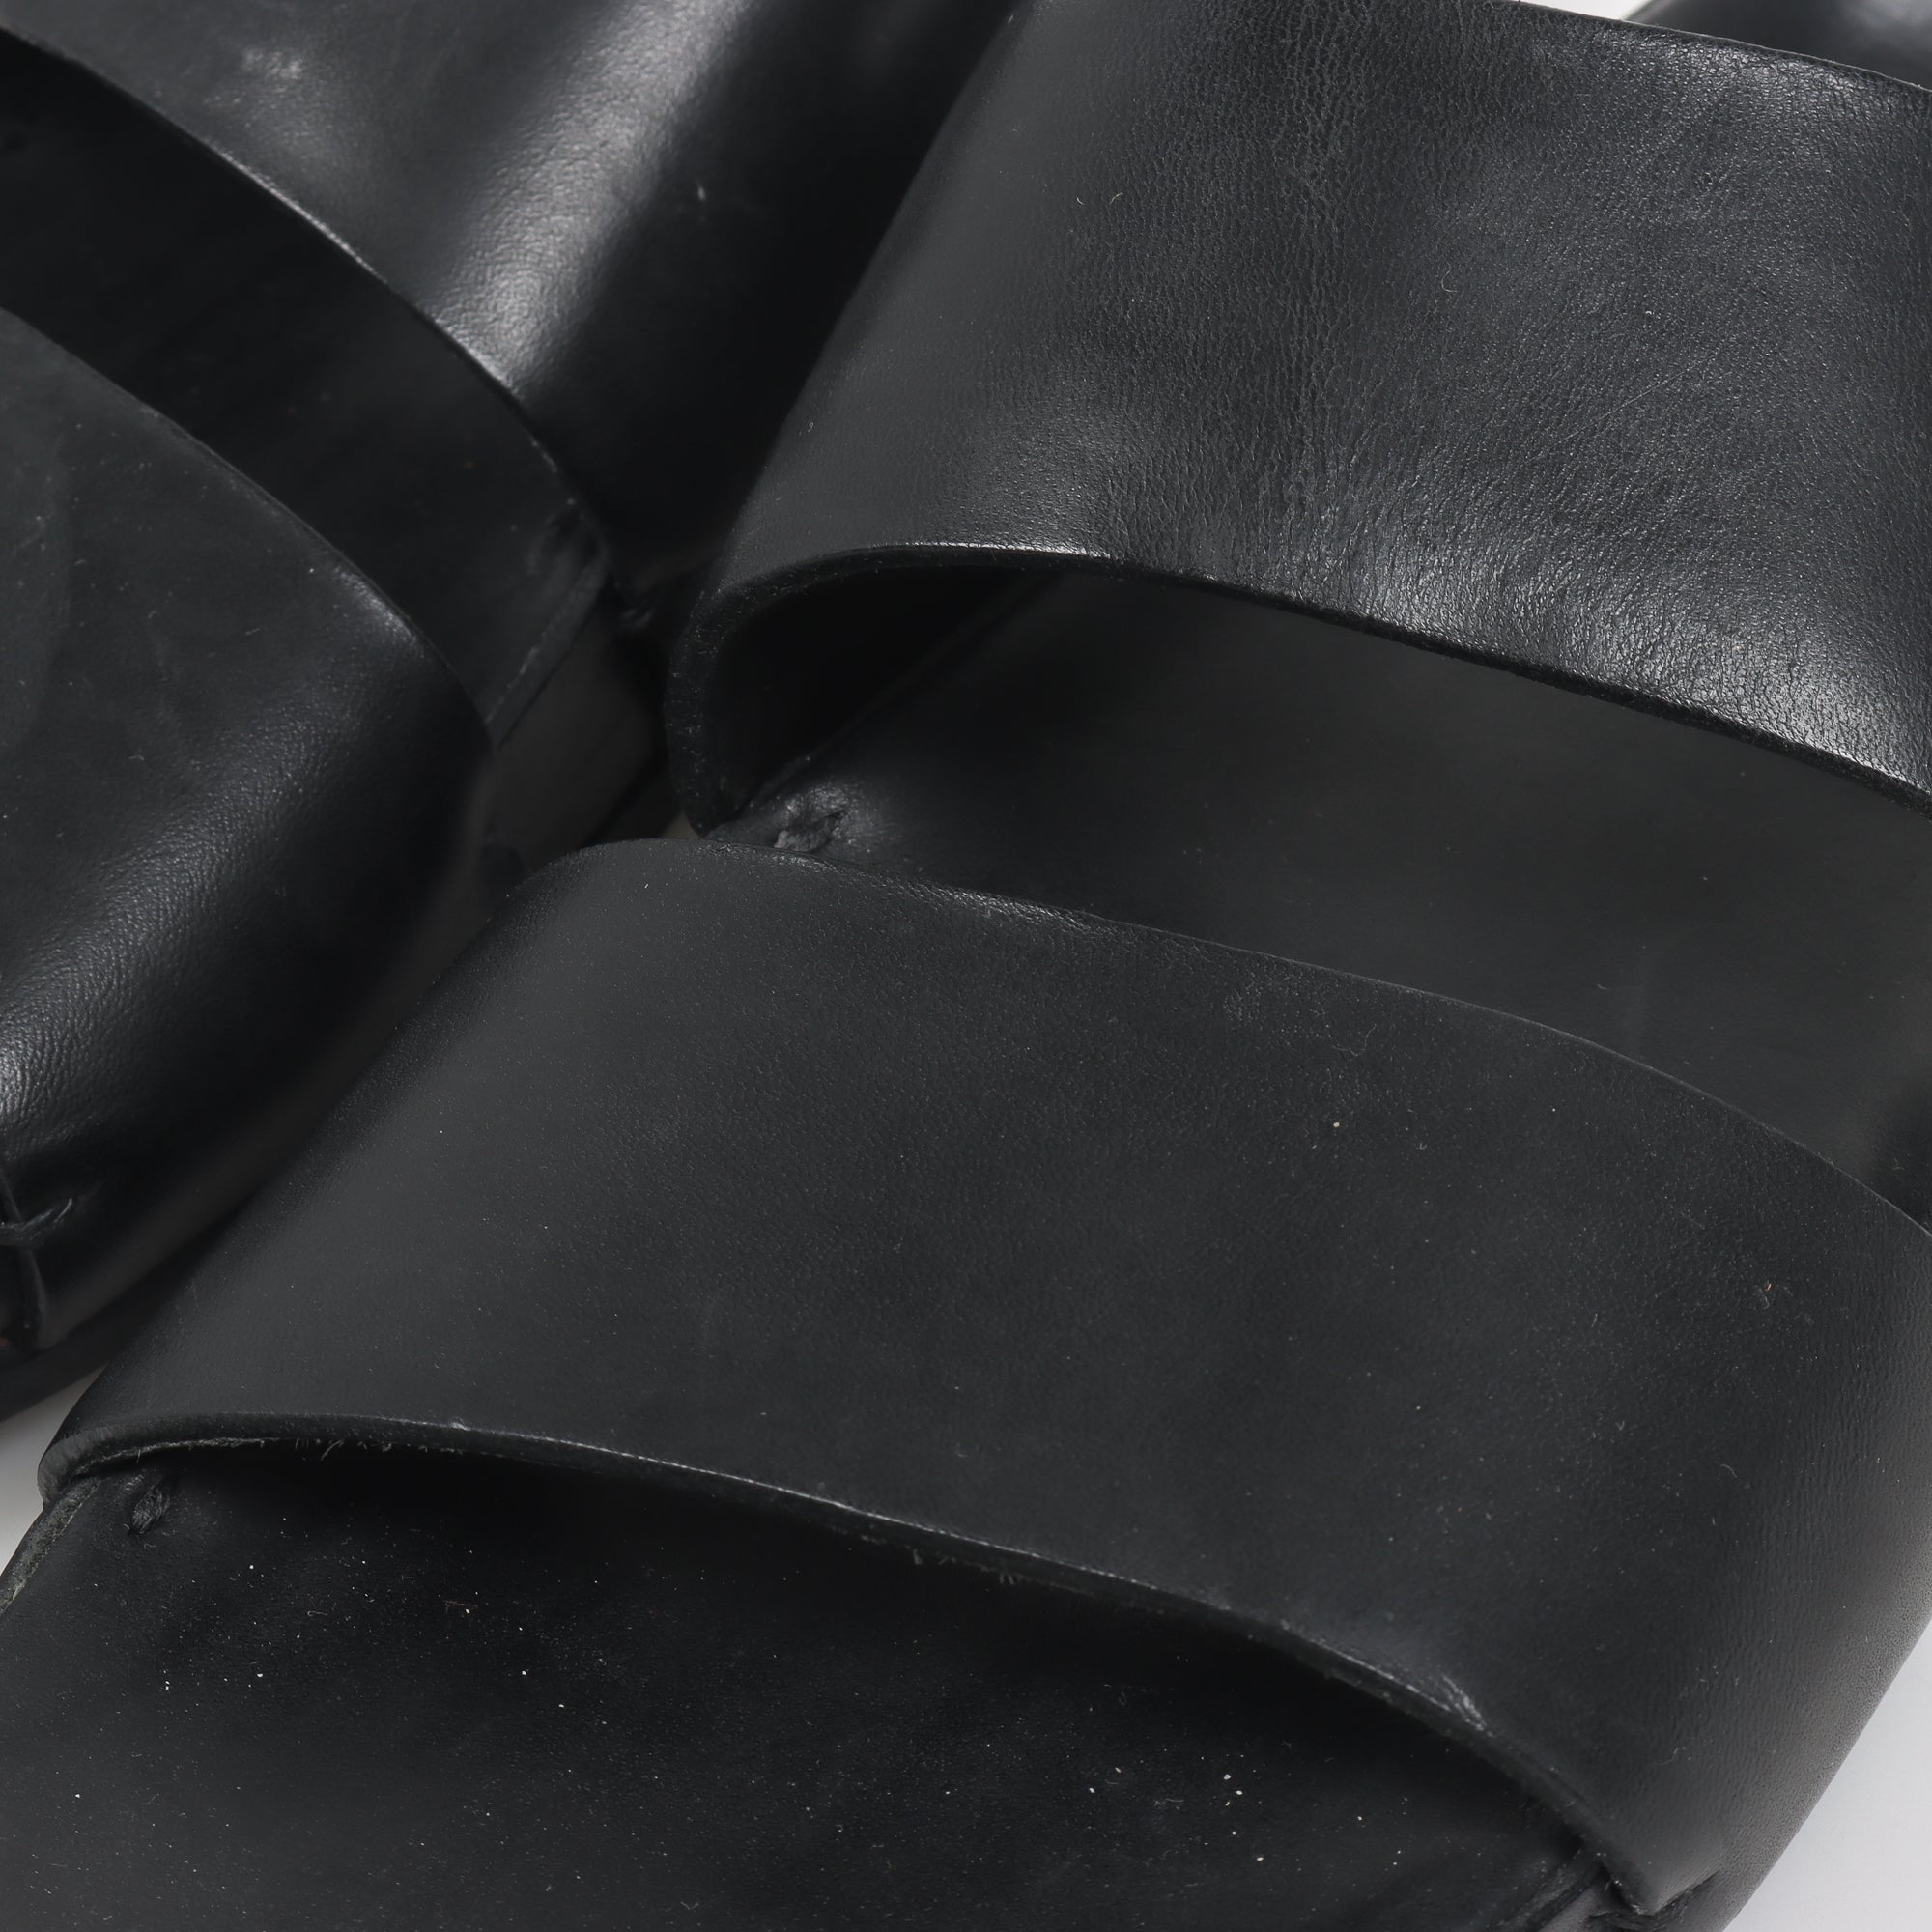 Feit Leather Slides Size L | 40